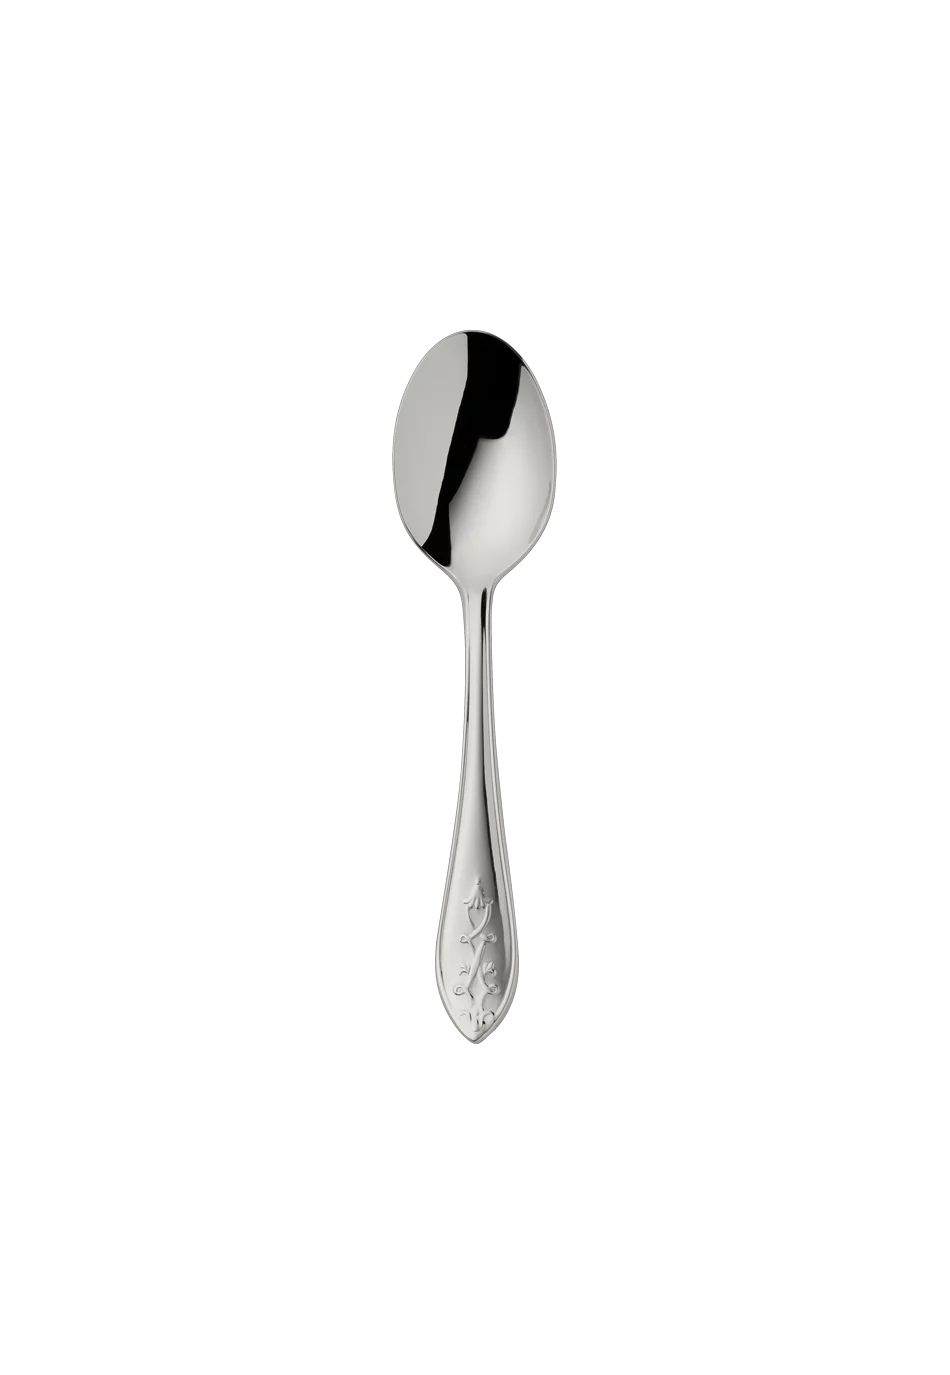 Jardin Children's Spoon (18/8 stainless steel)